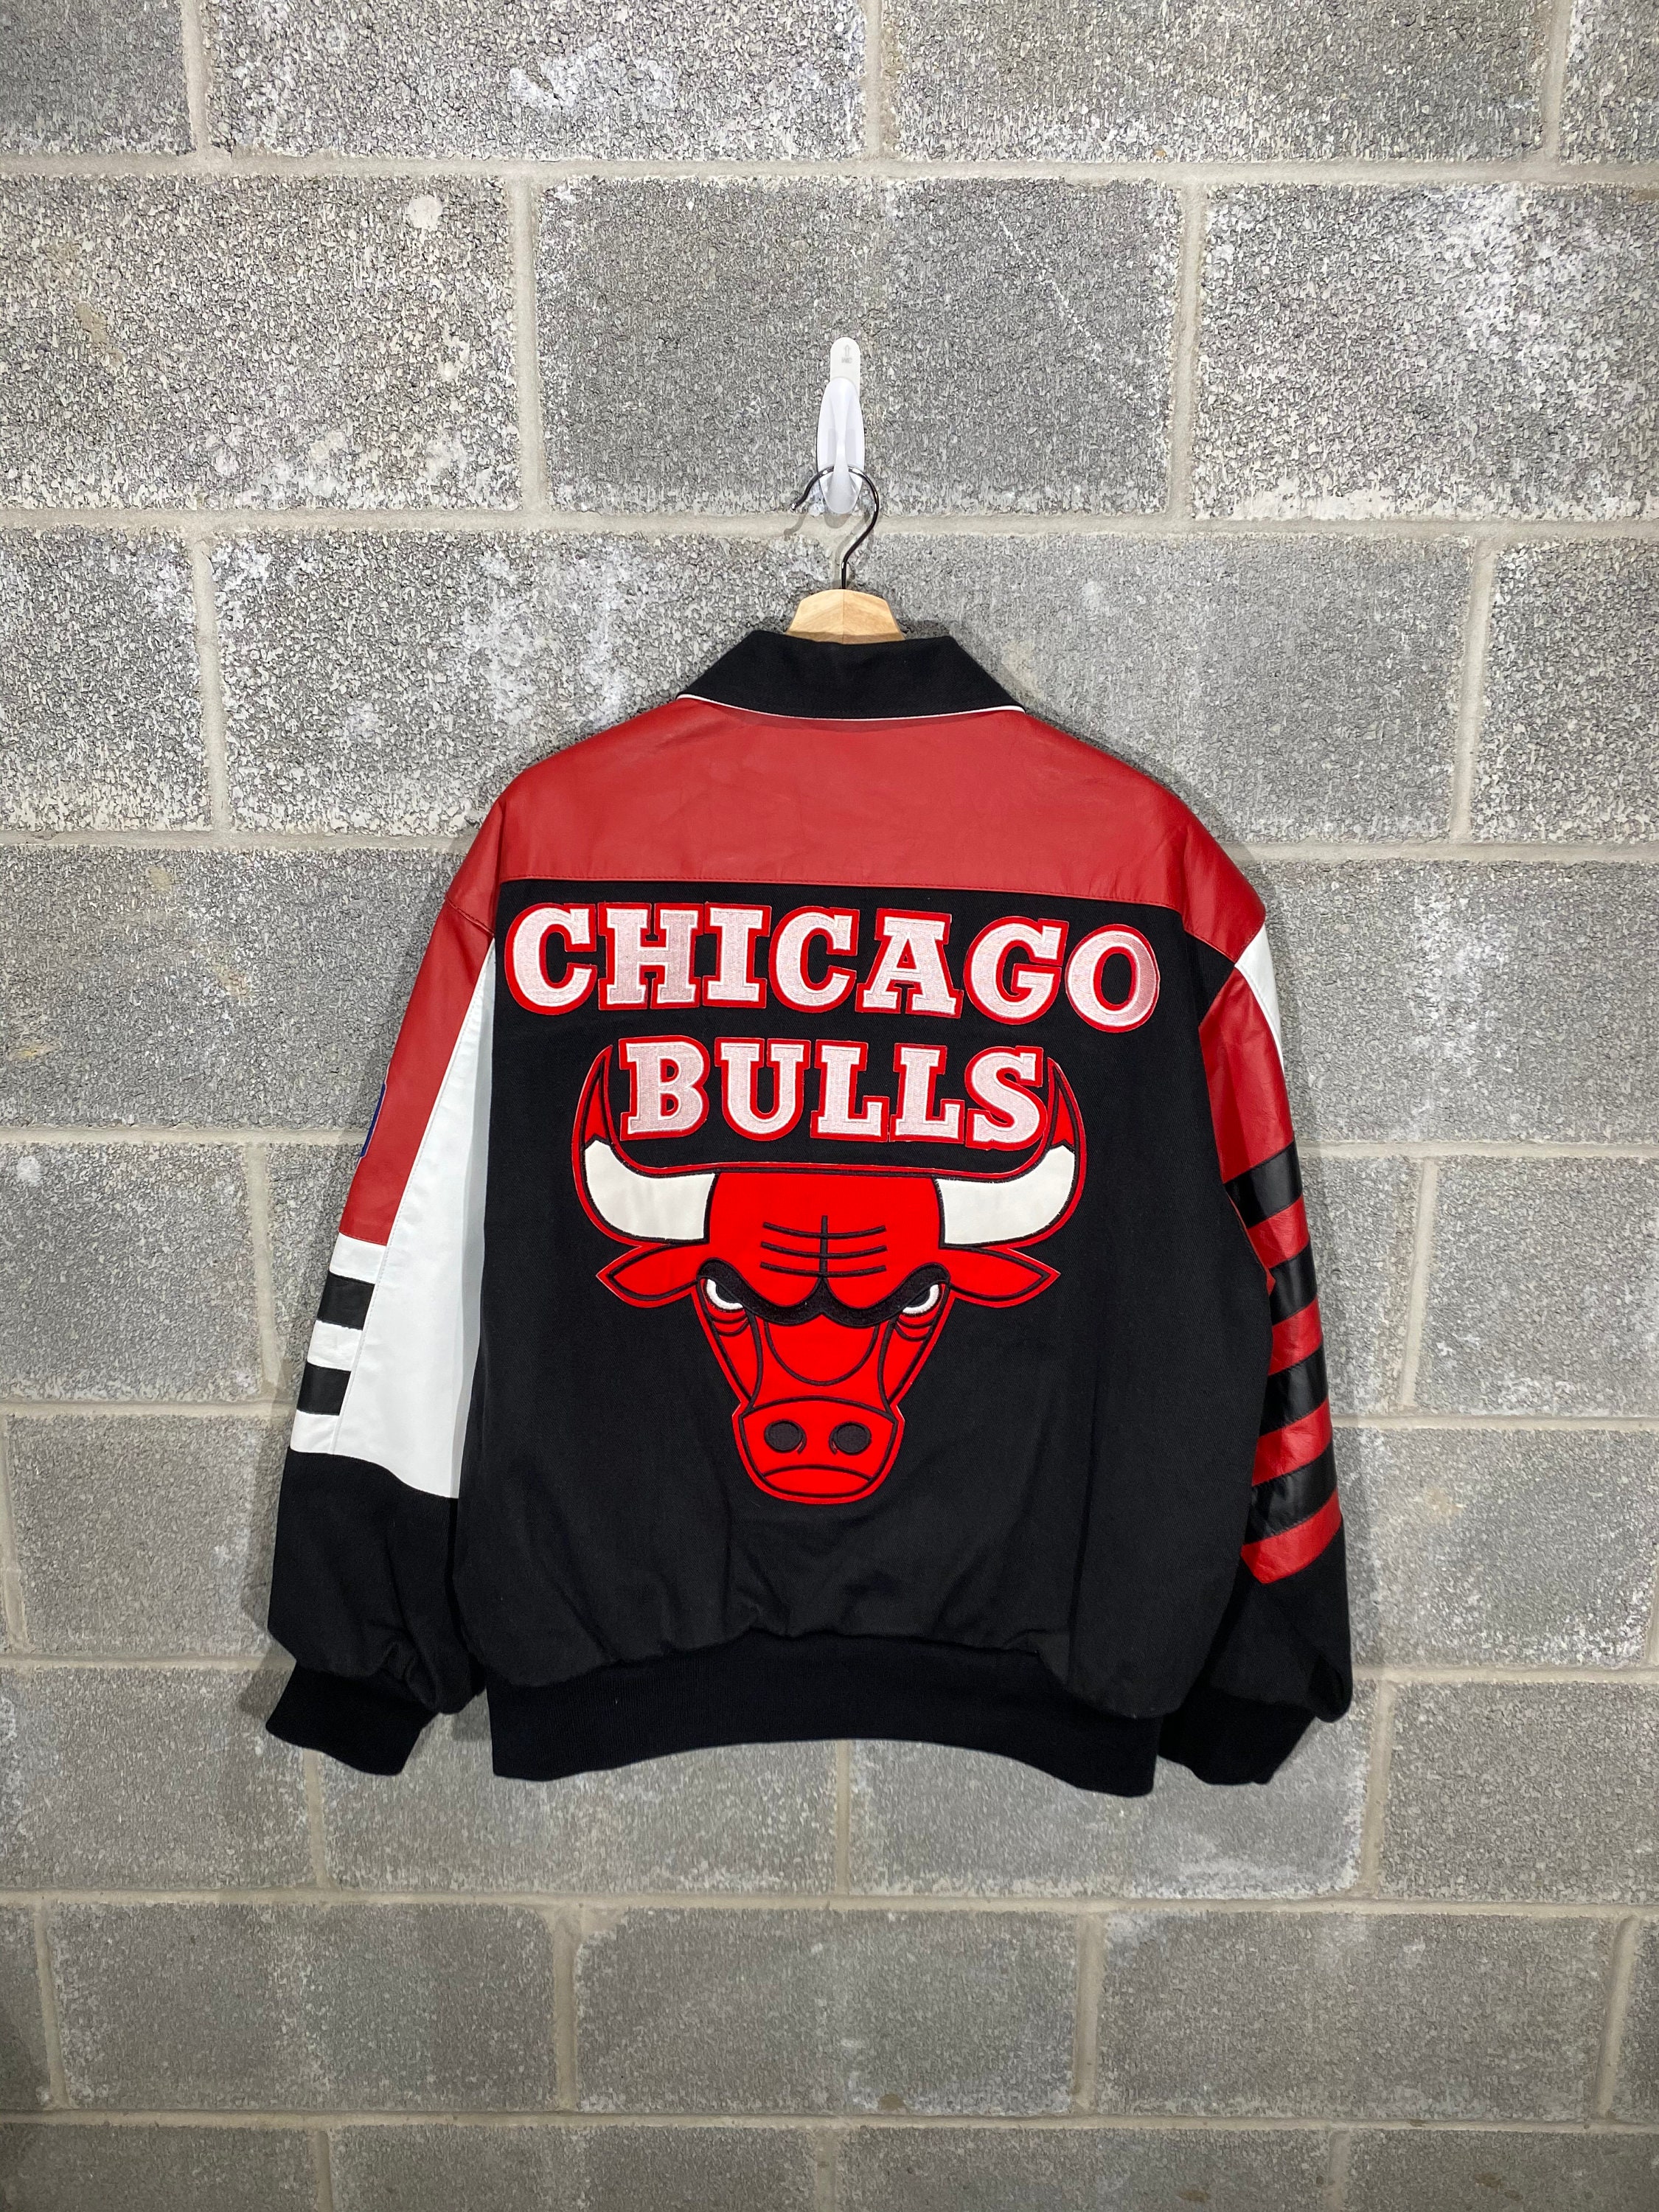 Maker of Jacket NBA Teams Jackets Chicago Bulls Vintage Red Three Peat Leather